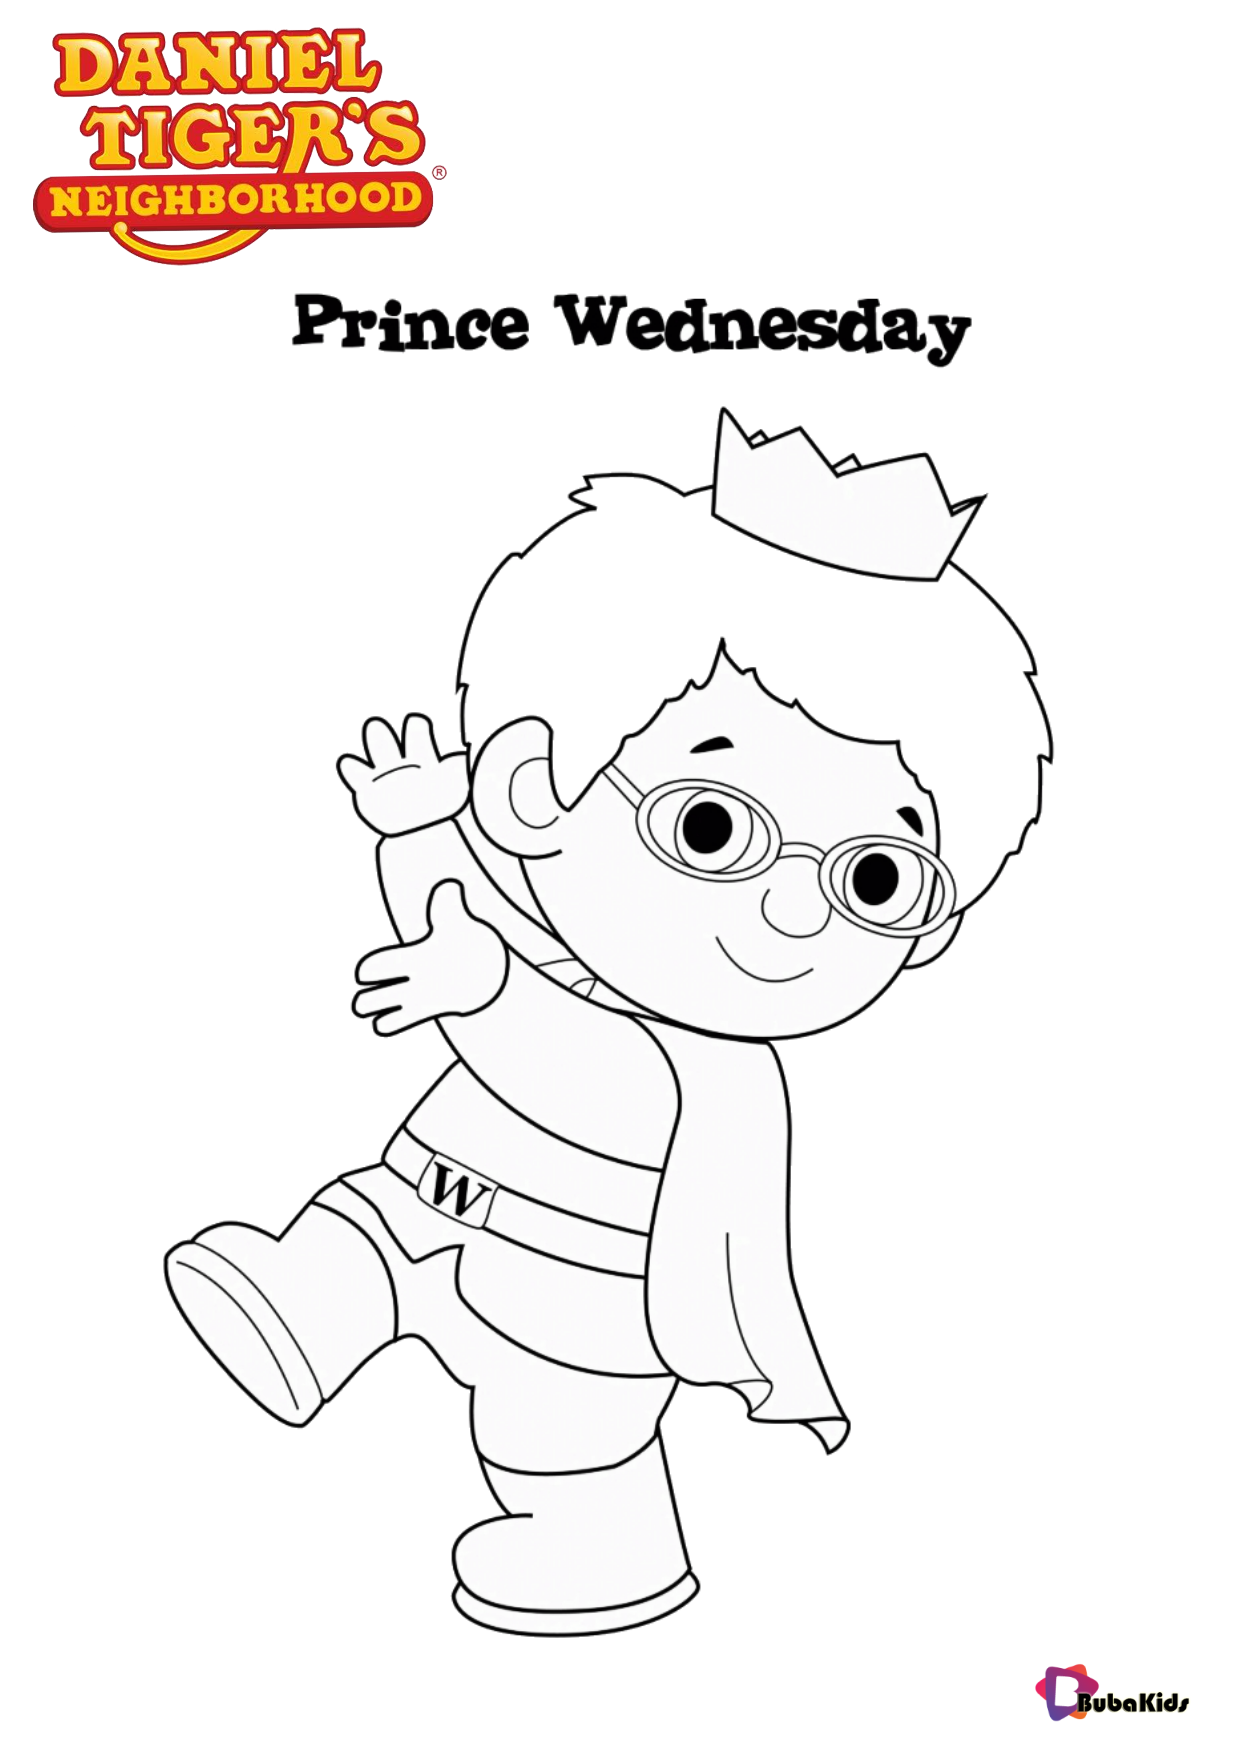 Prince Wednesday coloring page tv serial Daniel Tiger’s Neighborhood